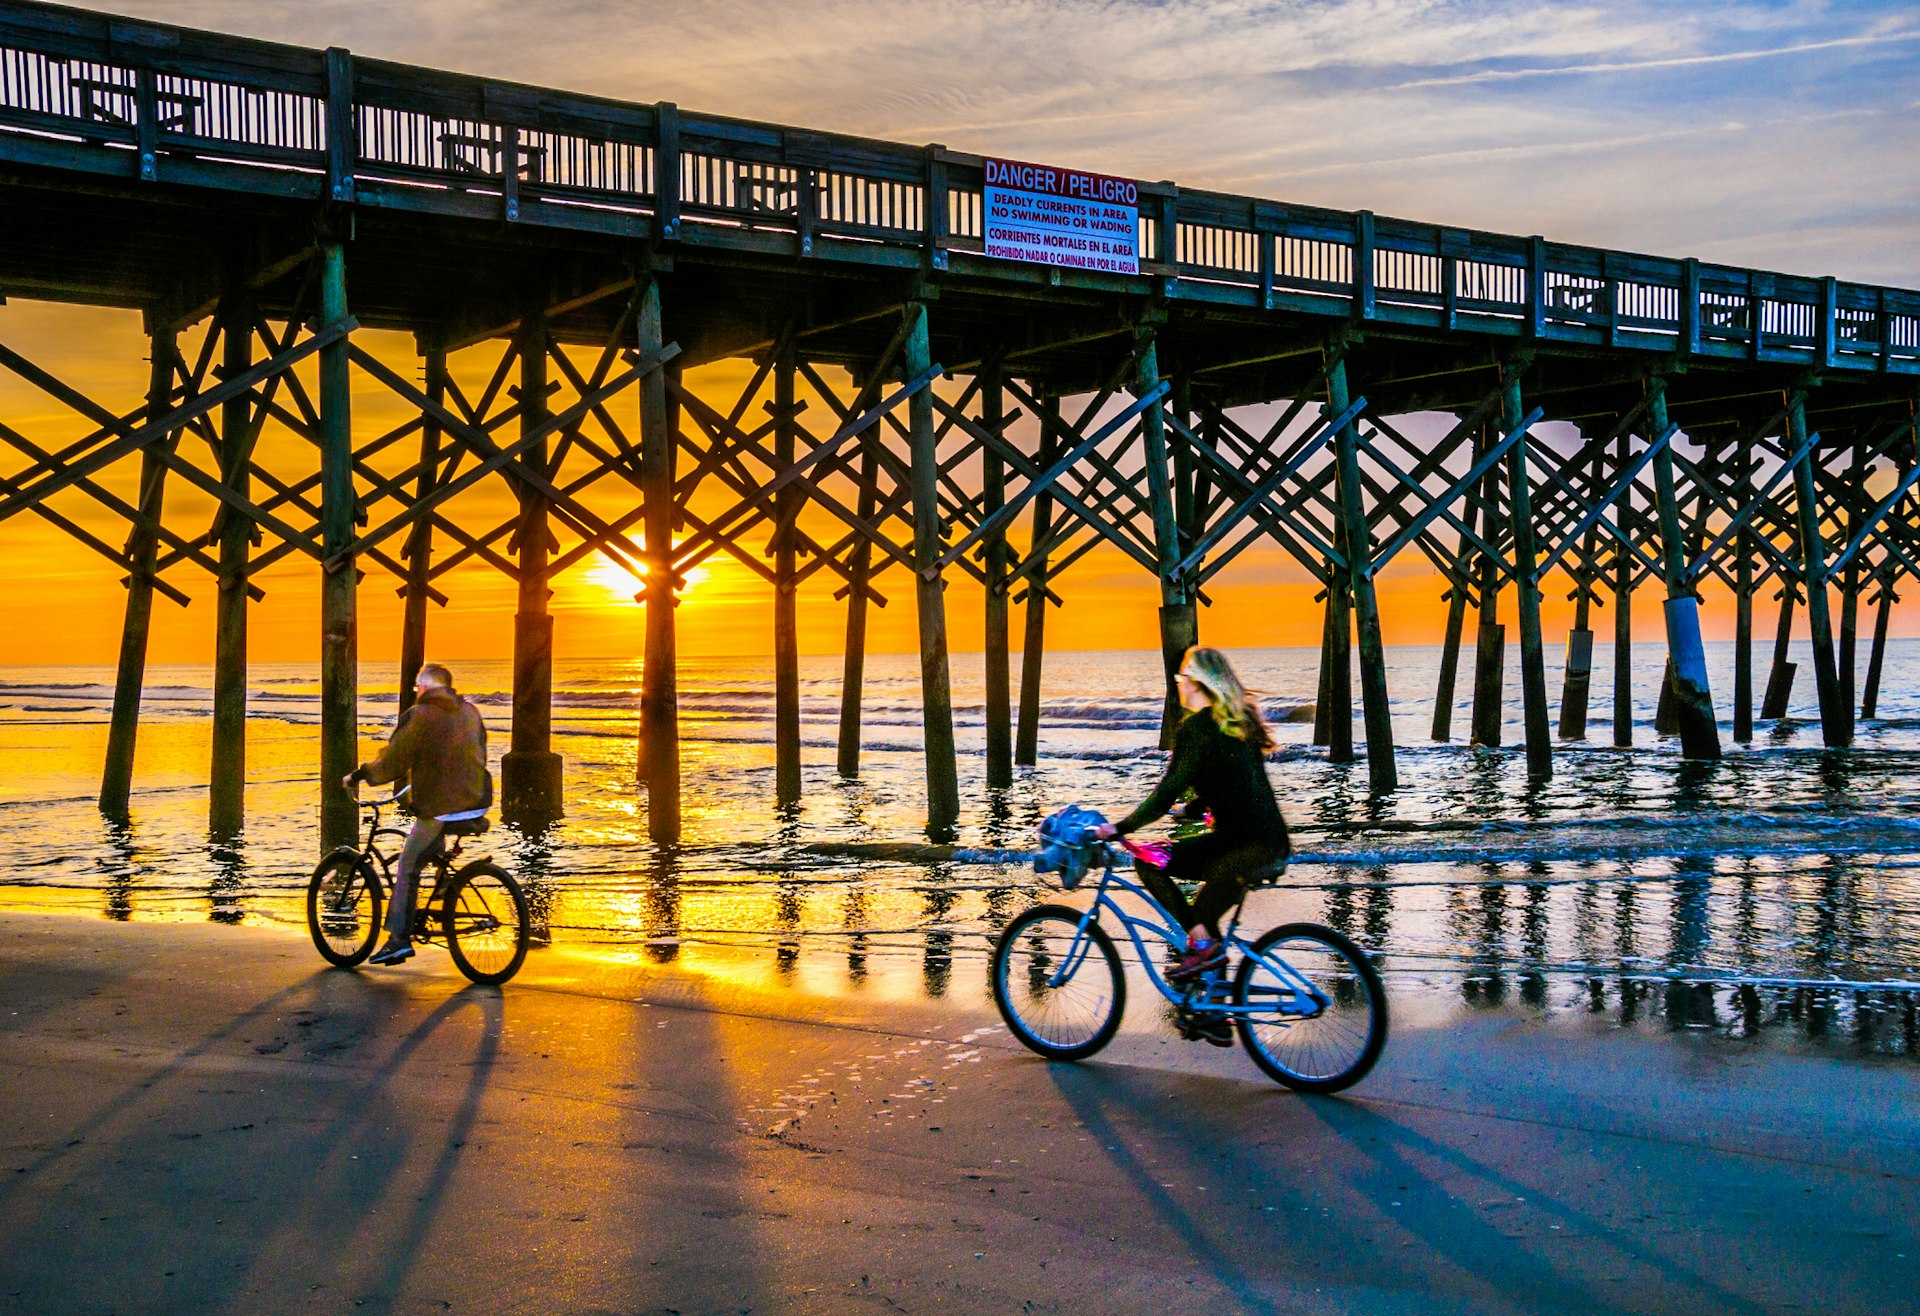 A sunset bike ride on Folly Beach Pier